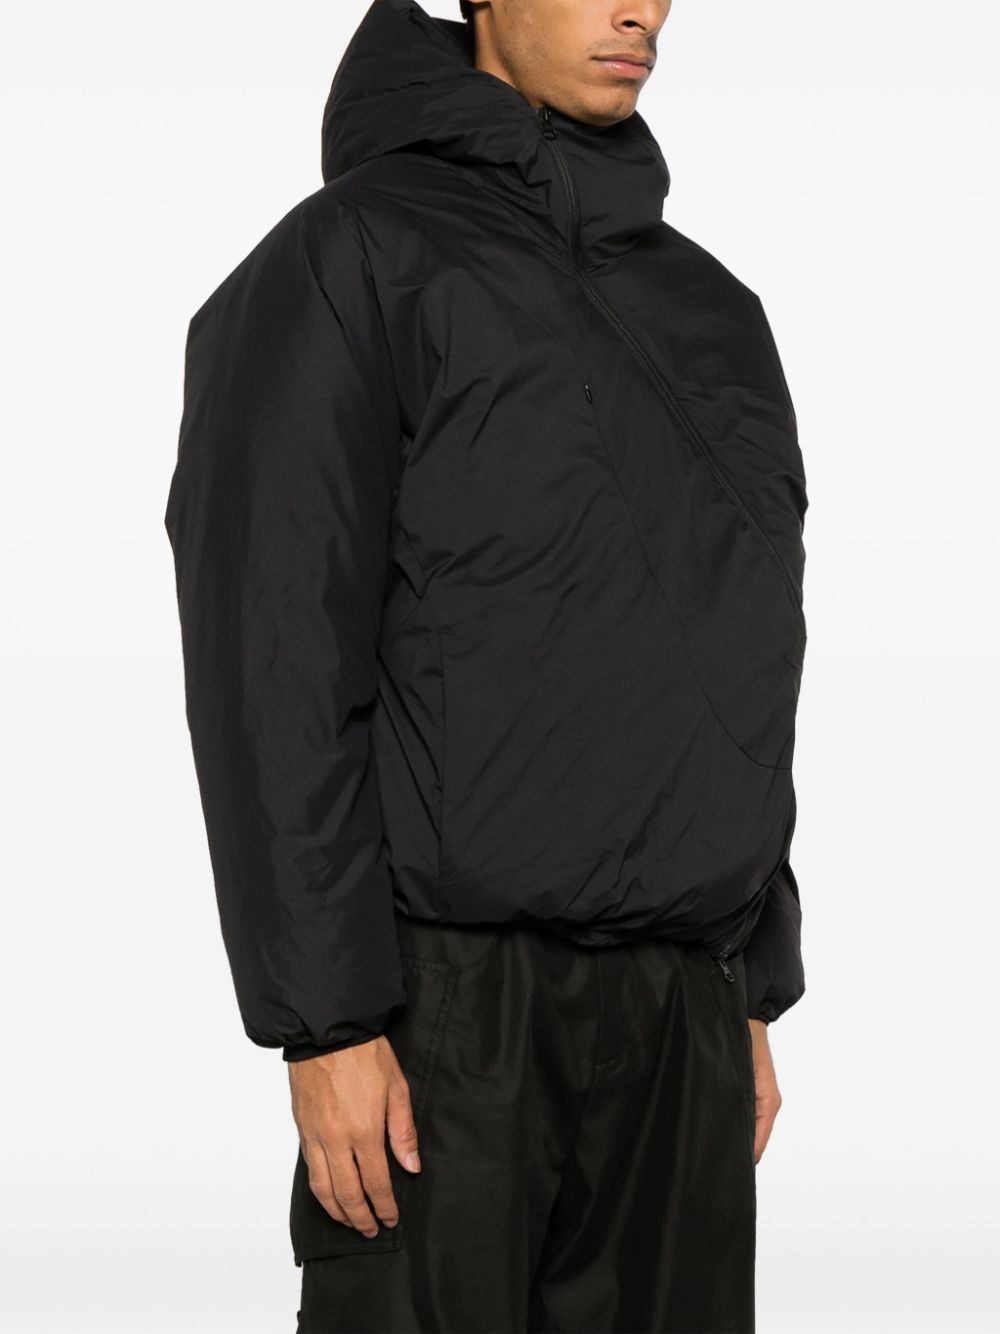 ripstop-texture asymmetrical zip-up jacket - 3